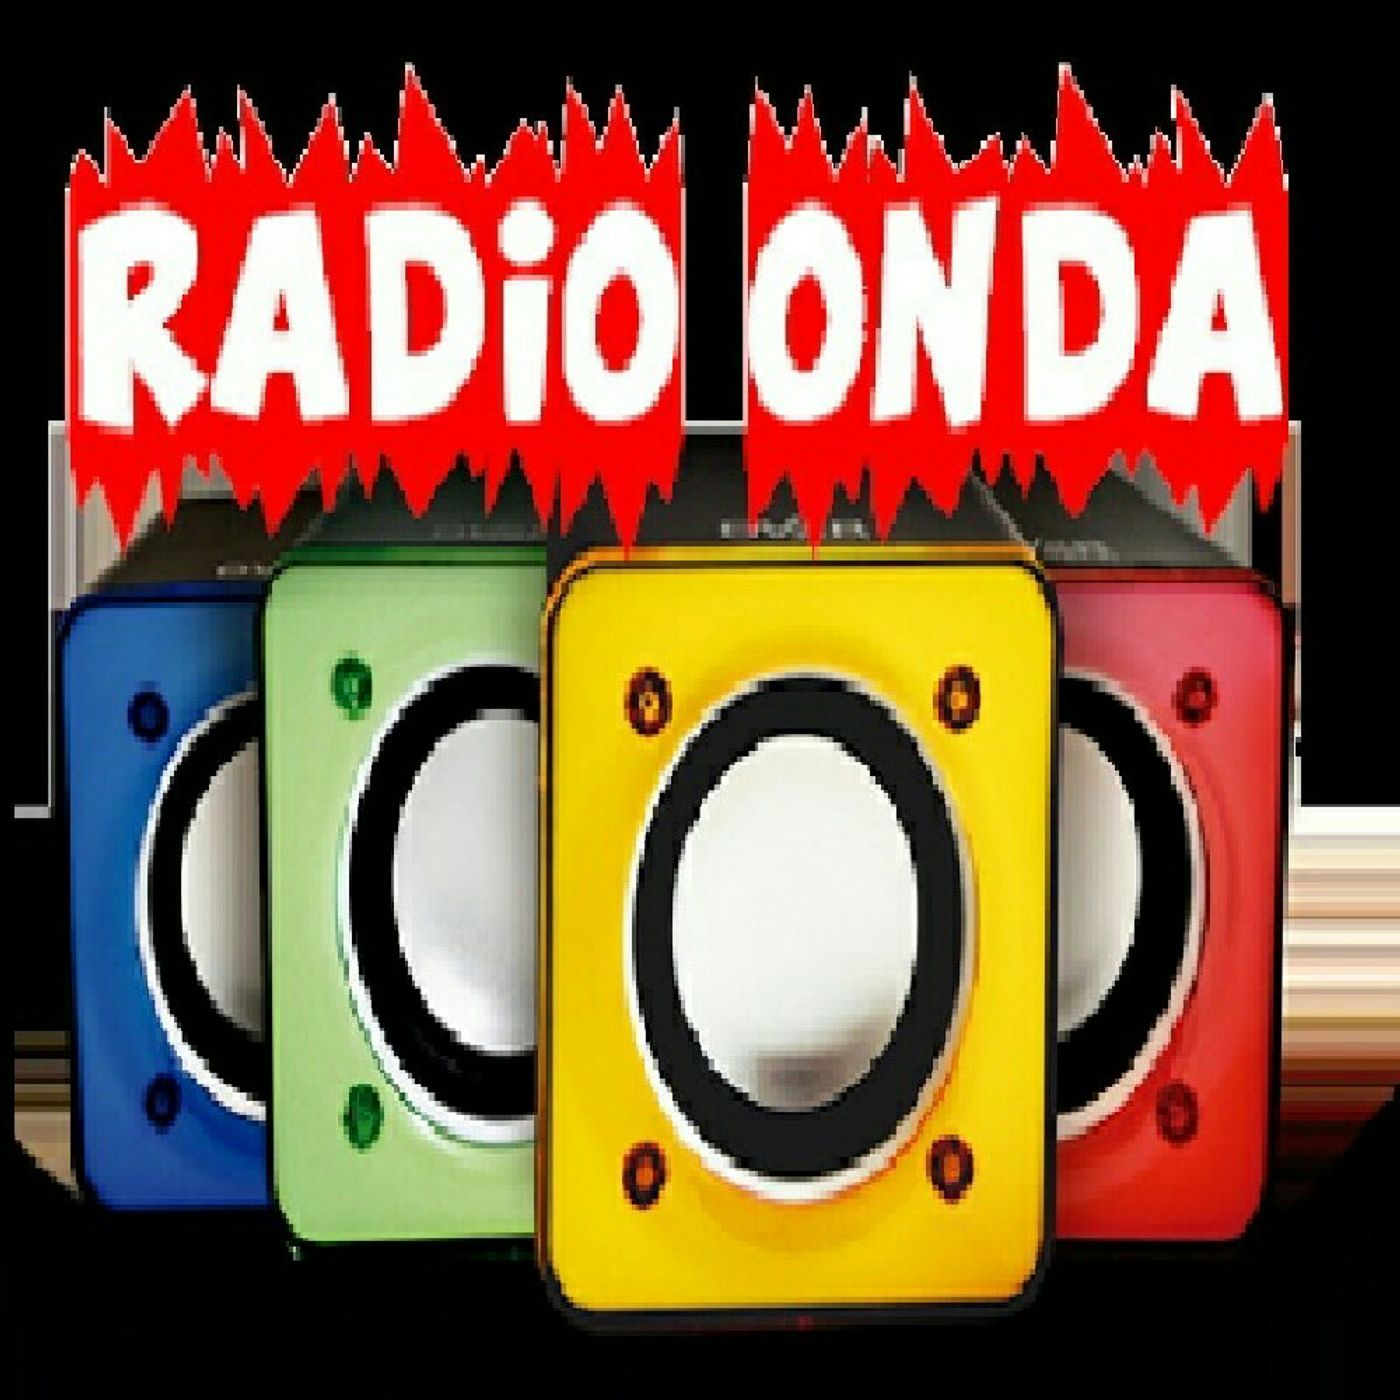 RADIO ONDA